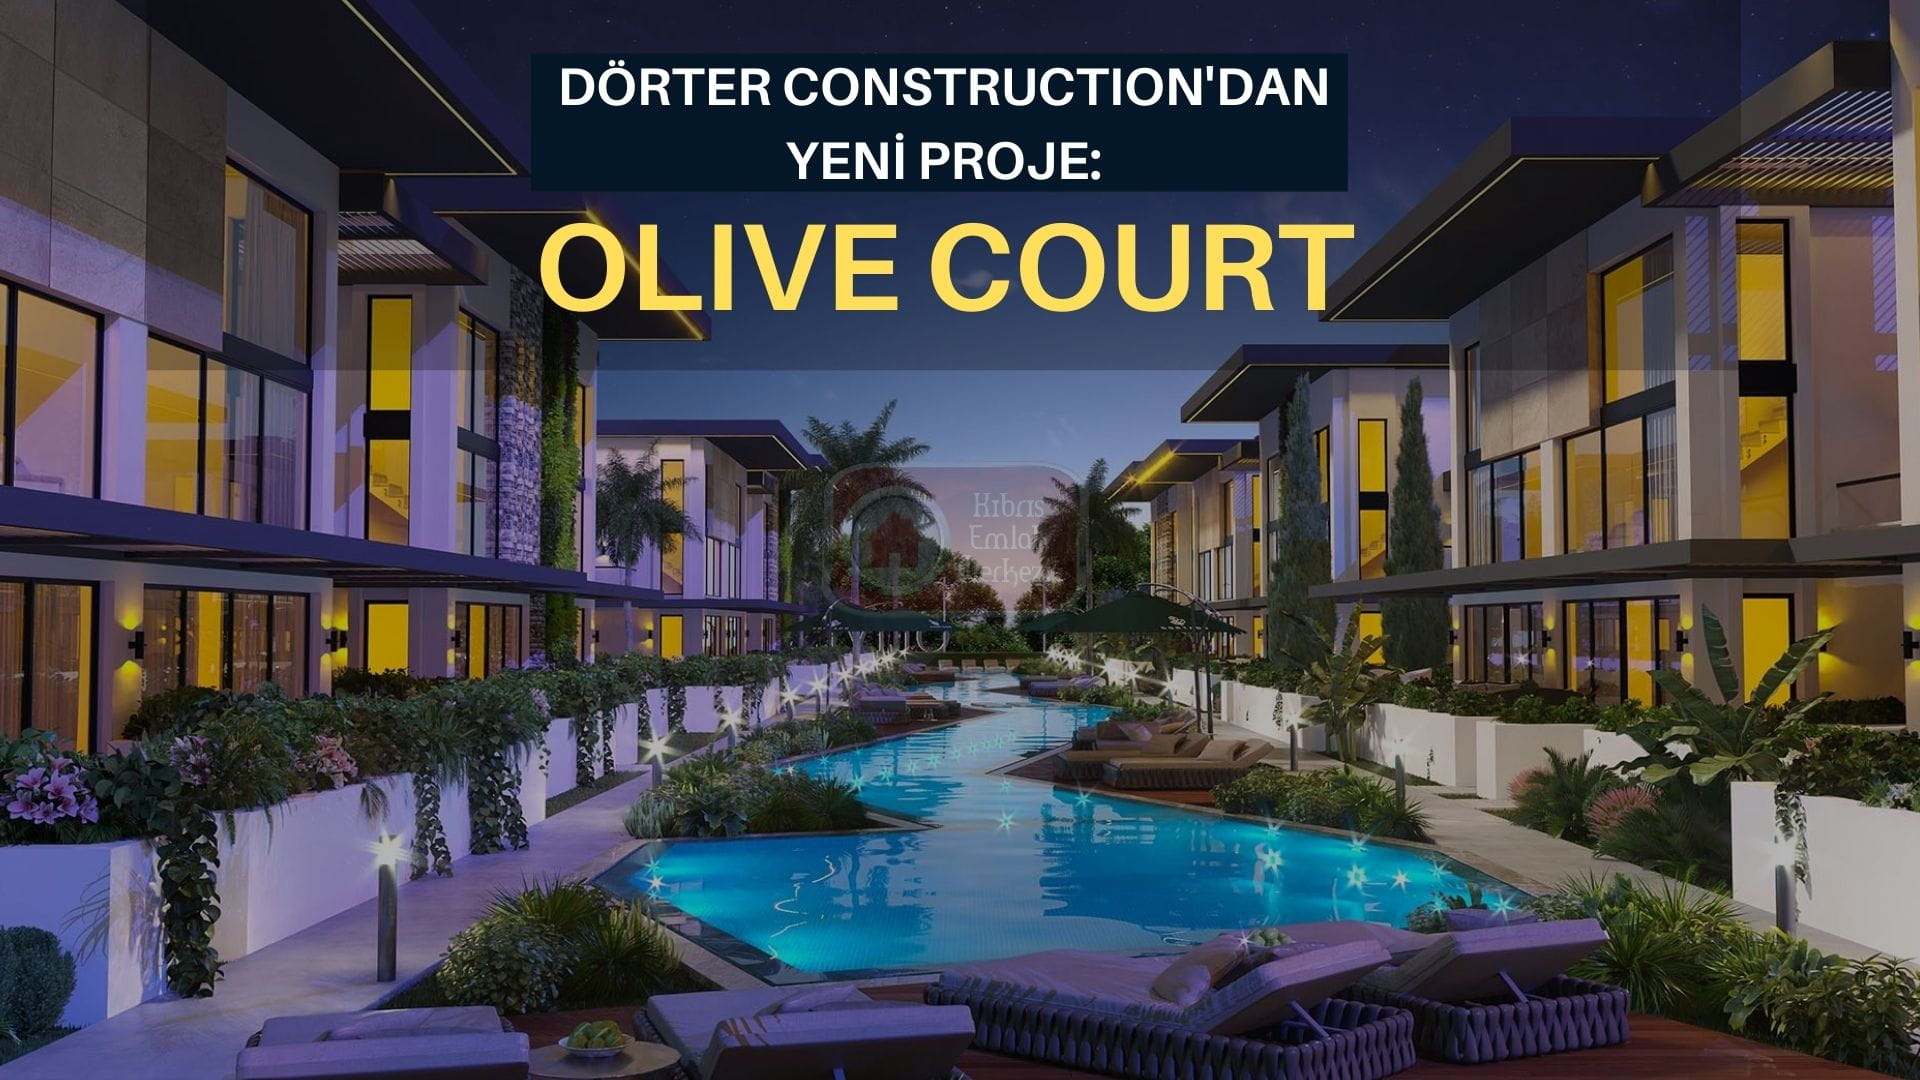 olive court dörter construction